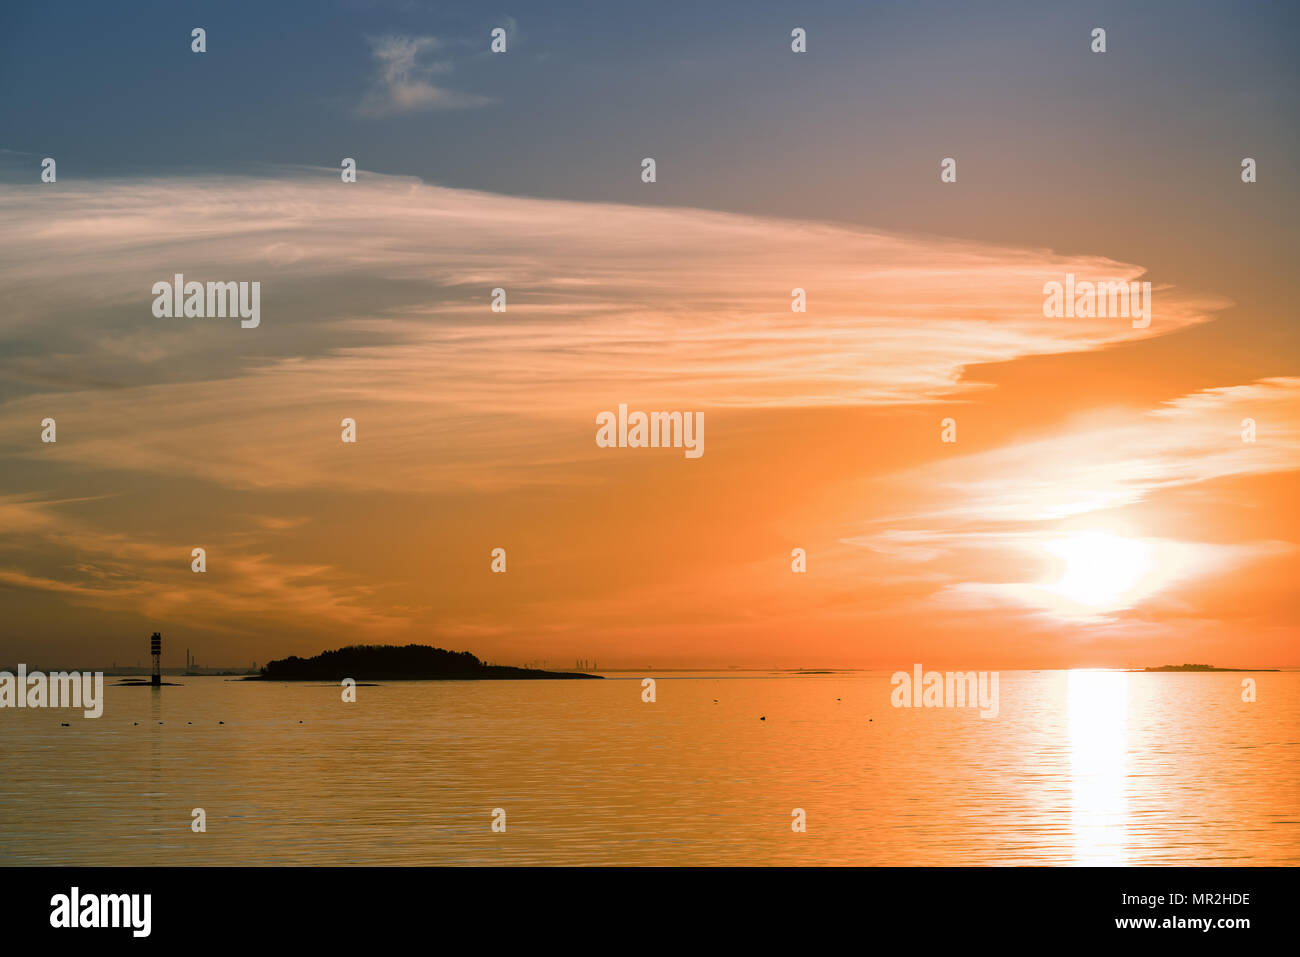 Sunrise seen from Bylandet island, Finland, Europe, EU Stock Photo